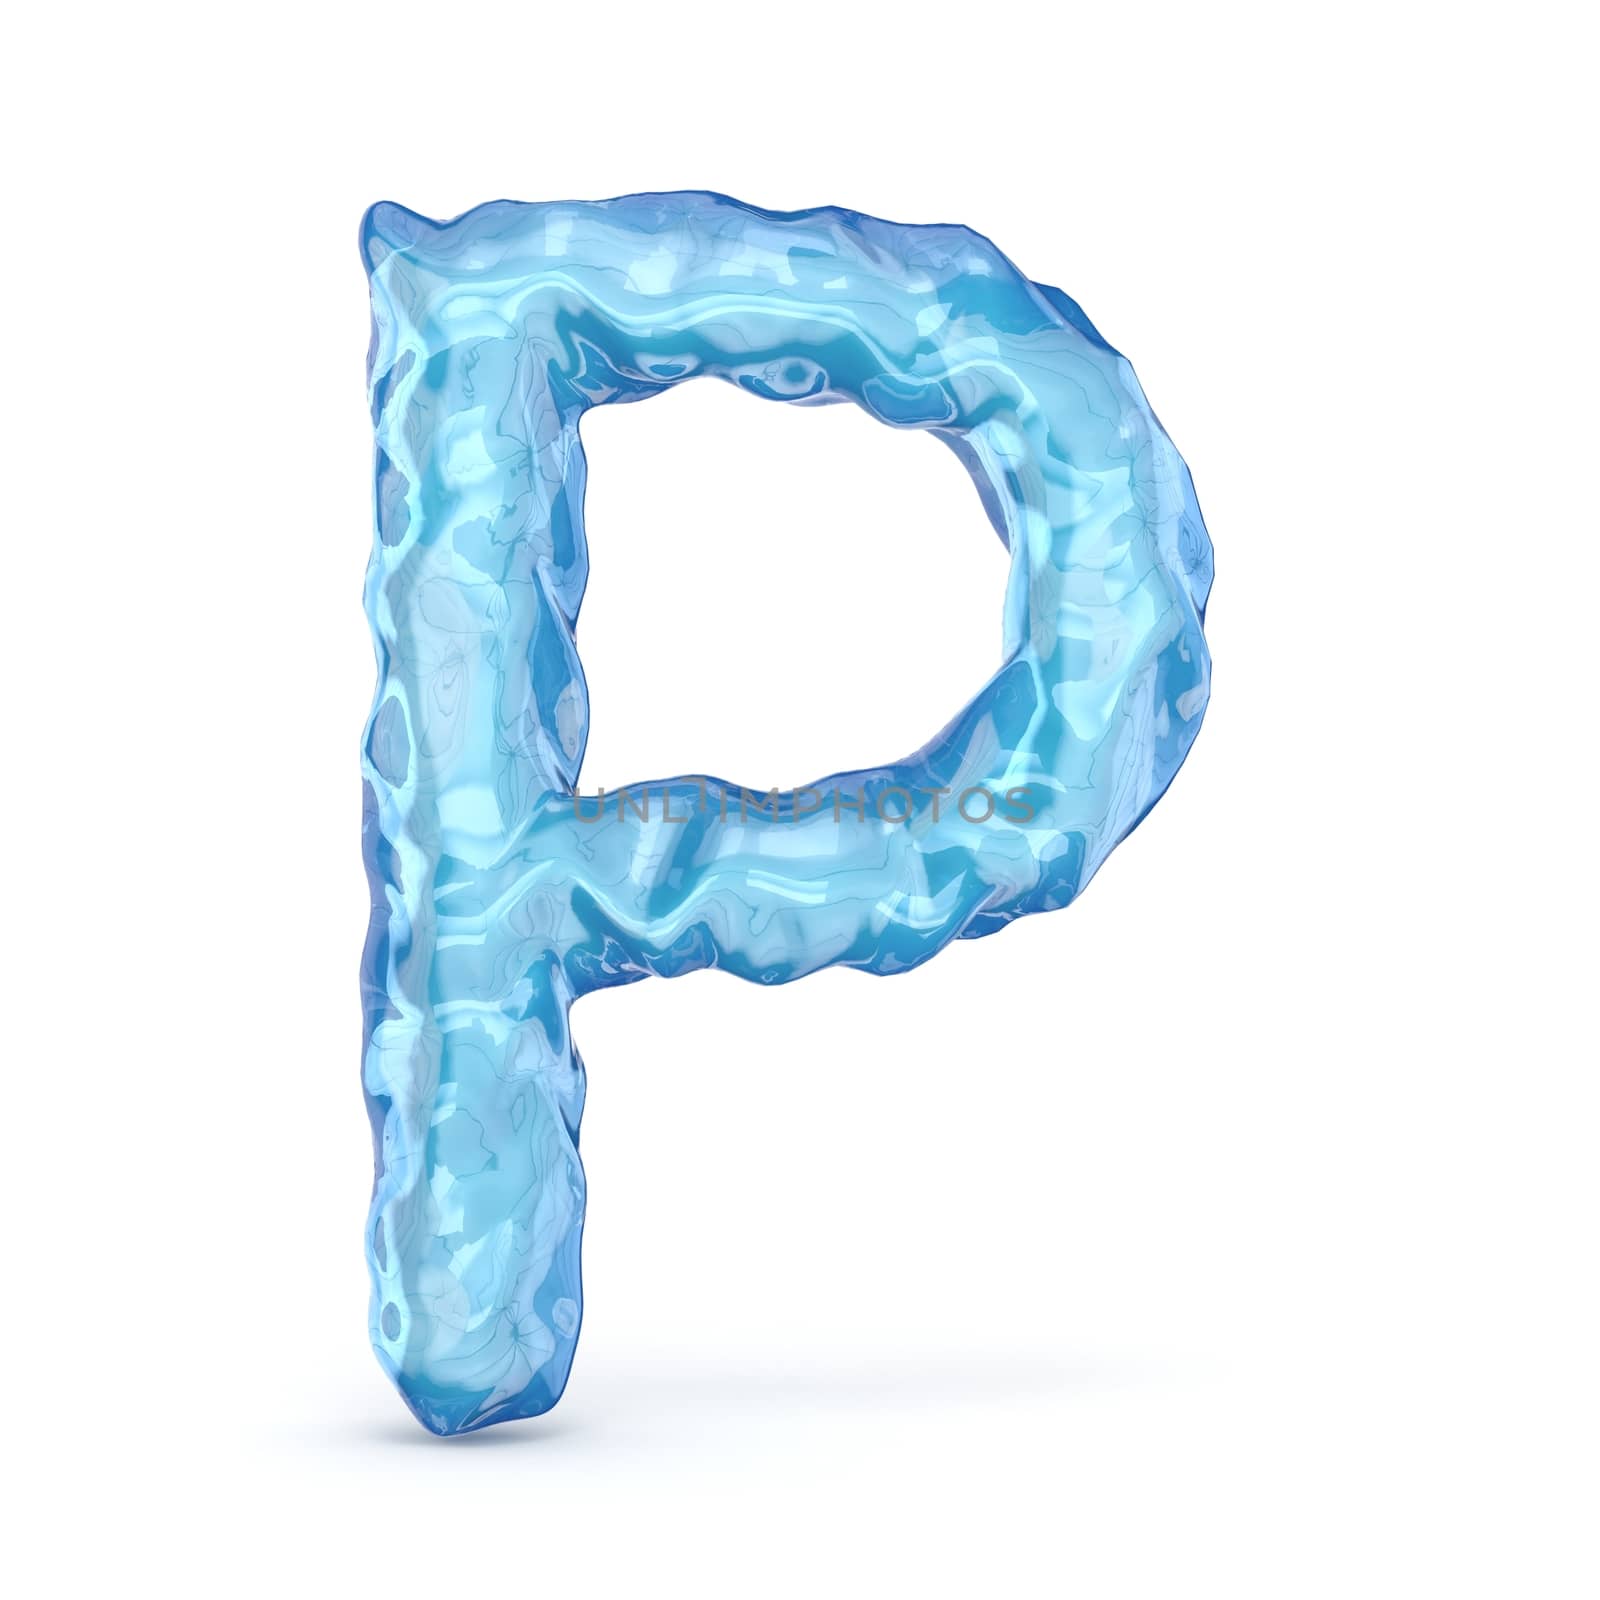 Ice font letter P 3D render illustration isolated on white background